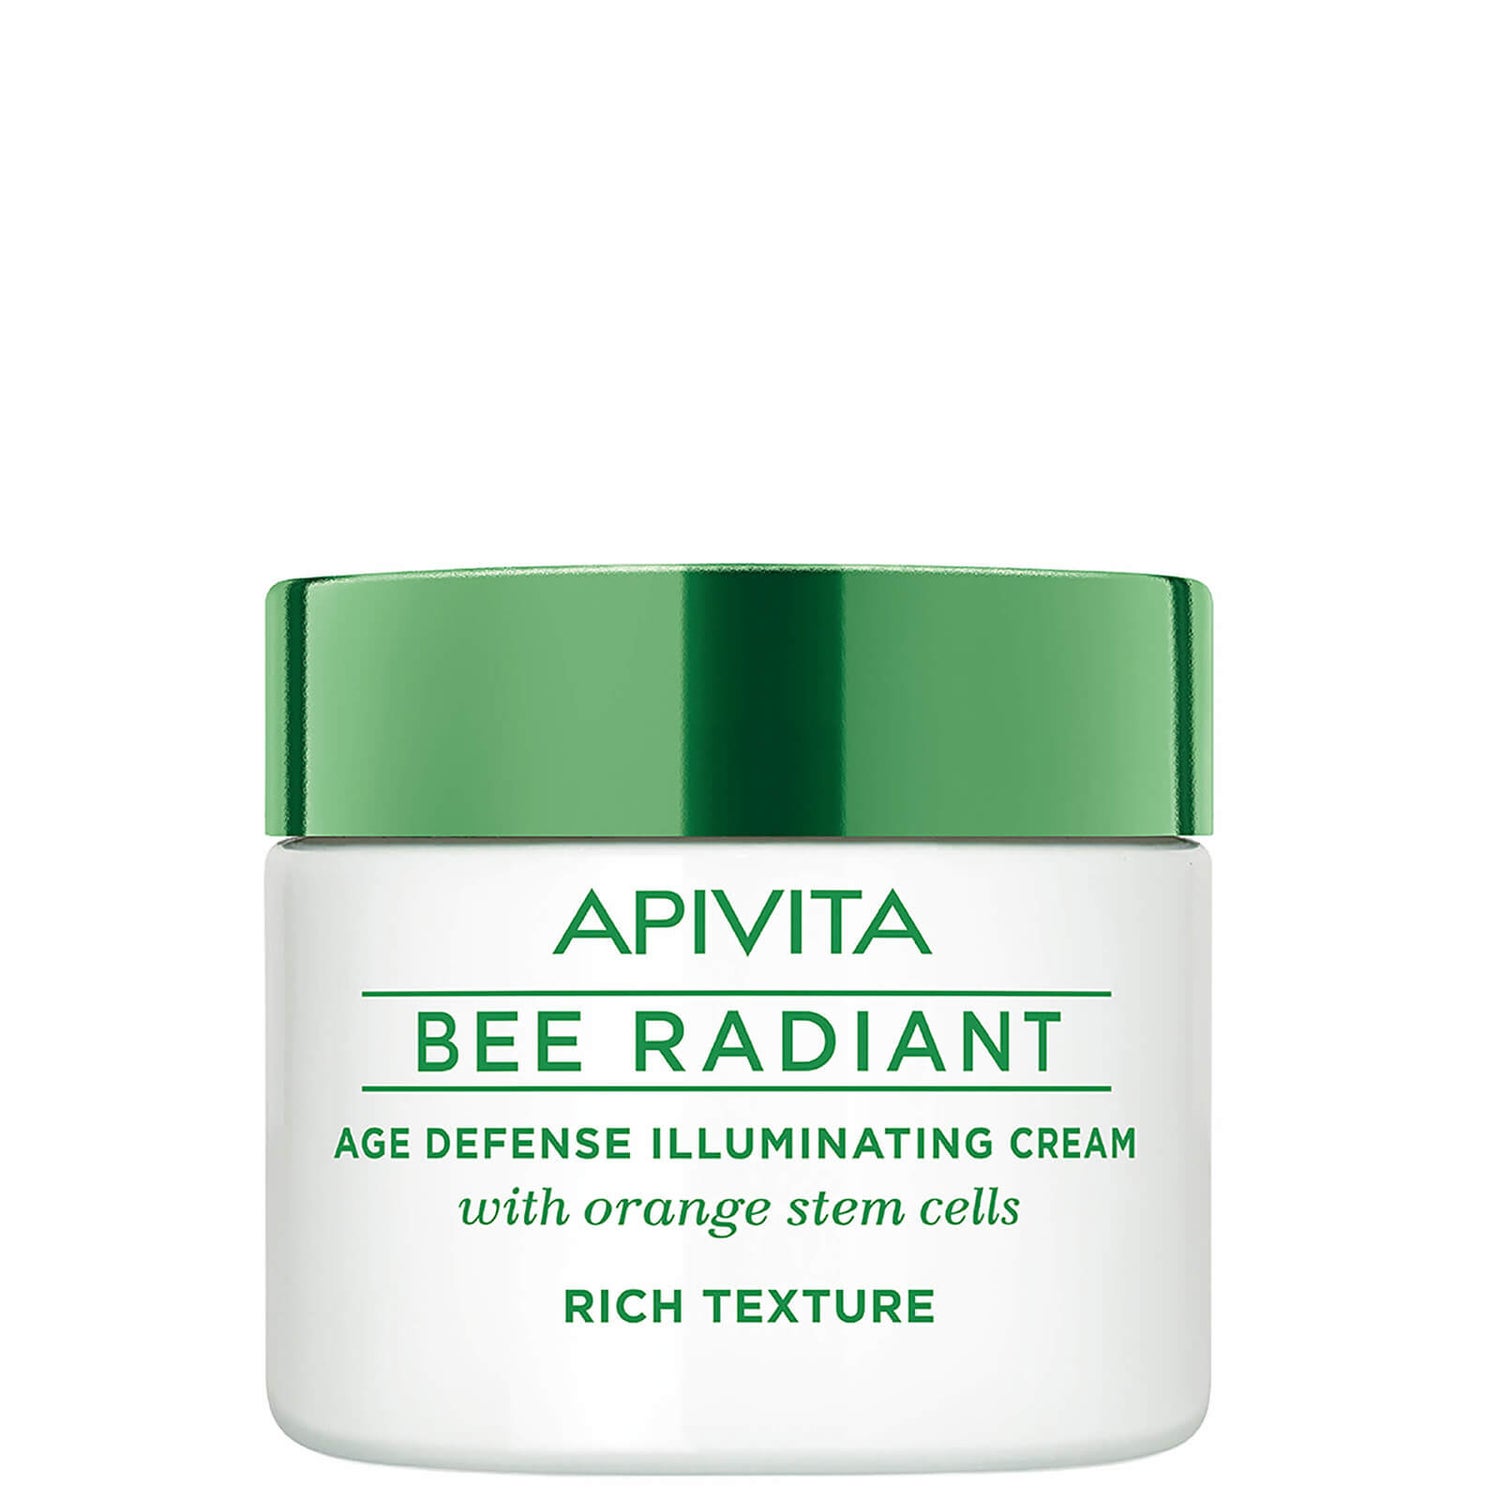 APIVITA Bee Radiant Age Defense Illuminating Cream - Rich Texture 50ml